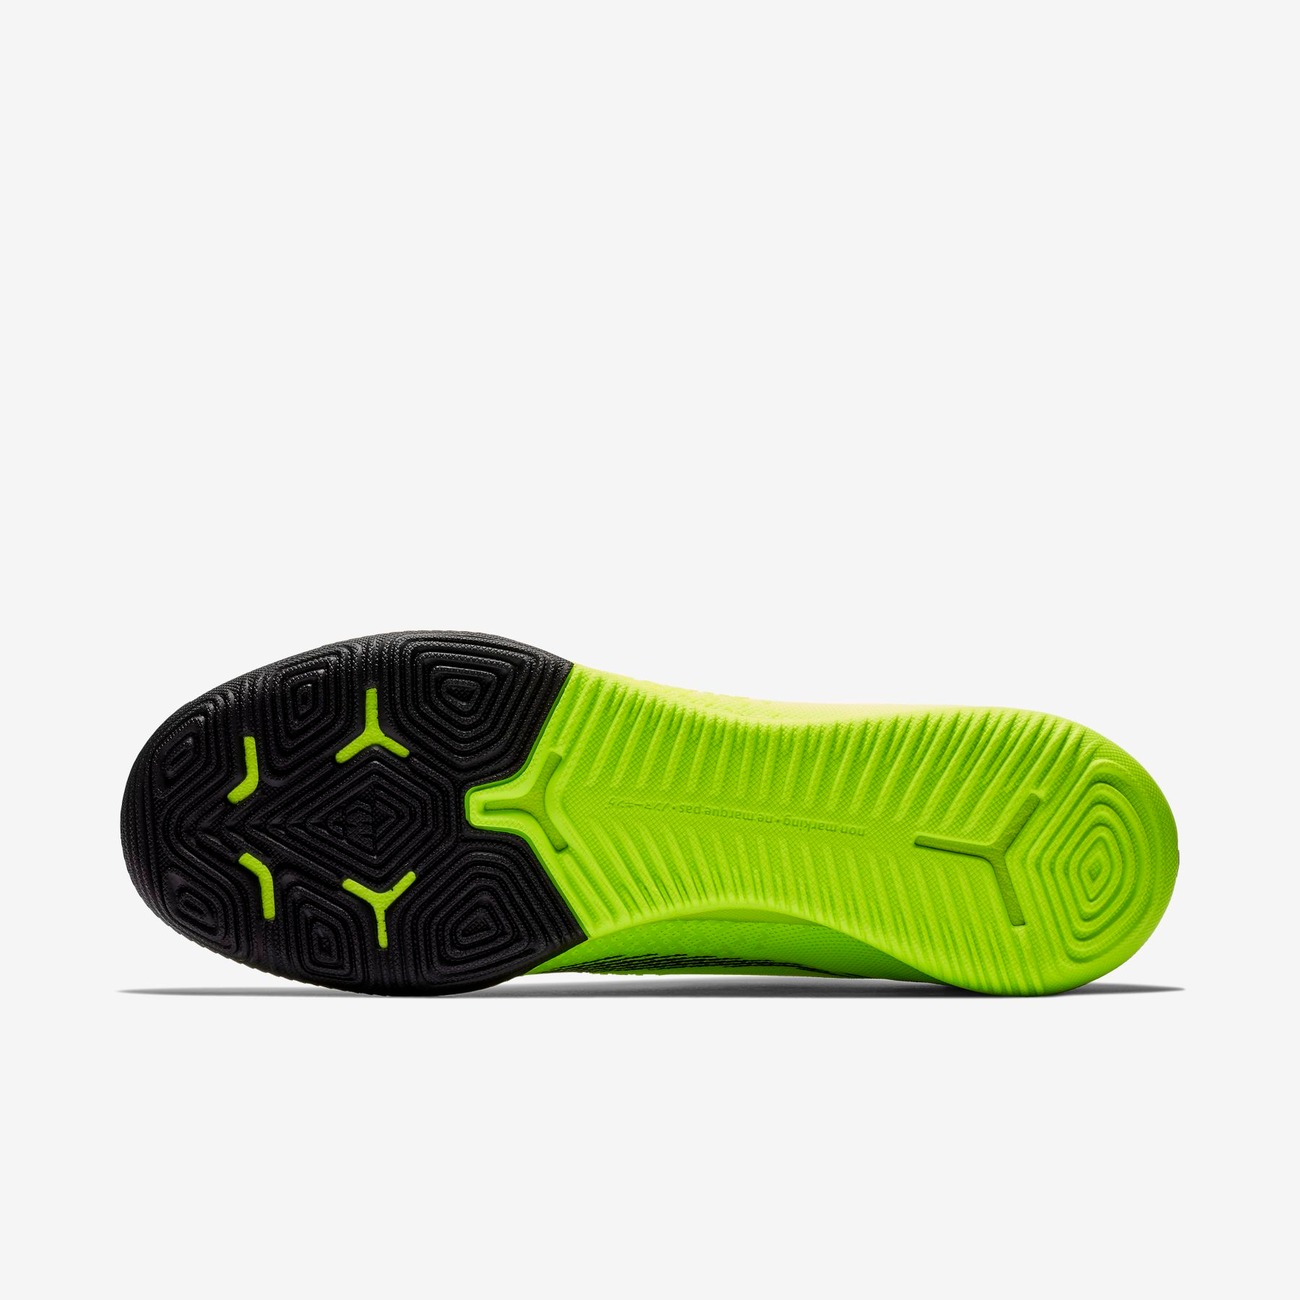 Chuteira Nike Mercurial Vapor XII Pro Unissex - Foto 6